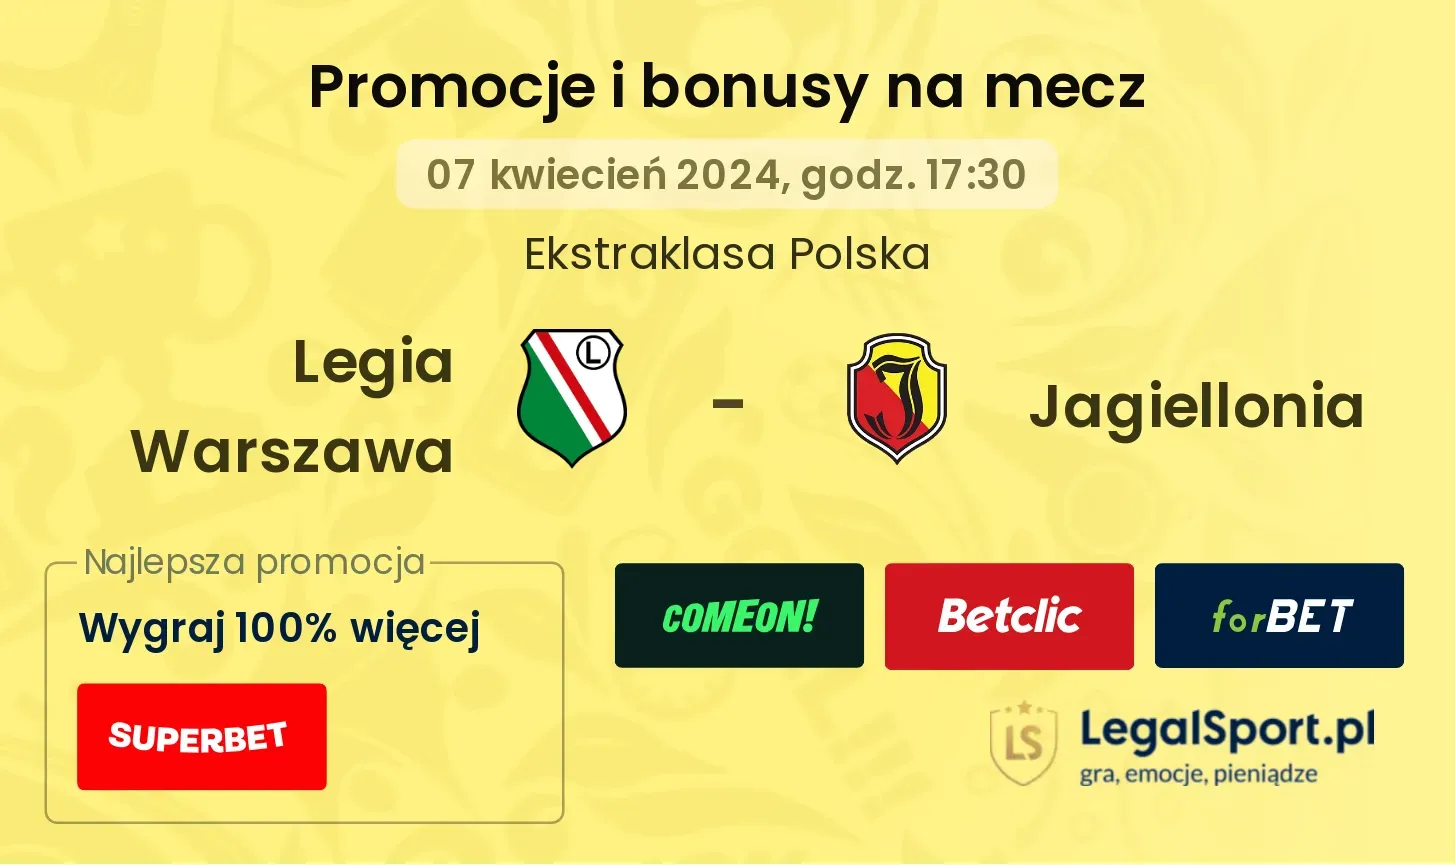 Legia Warszawa - Jagiellonia promocje bonusy na mecz